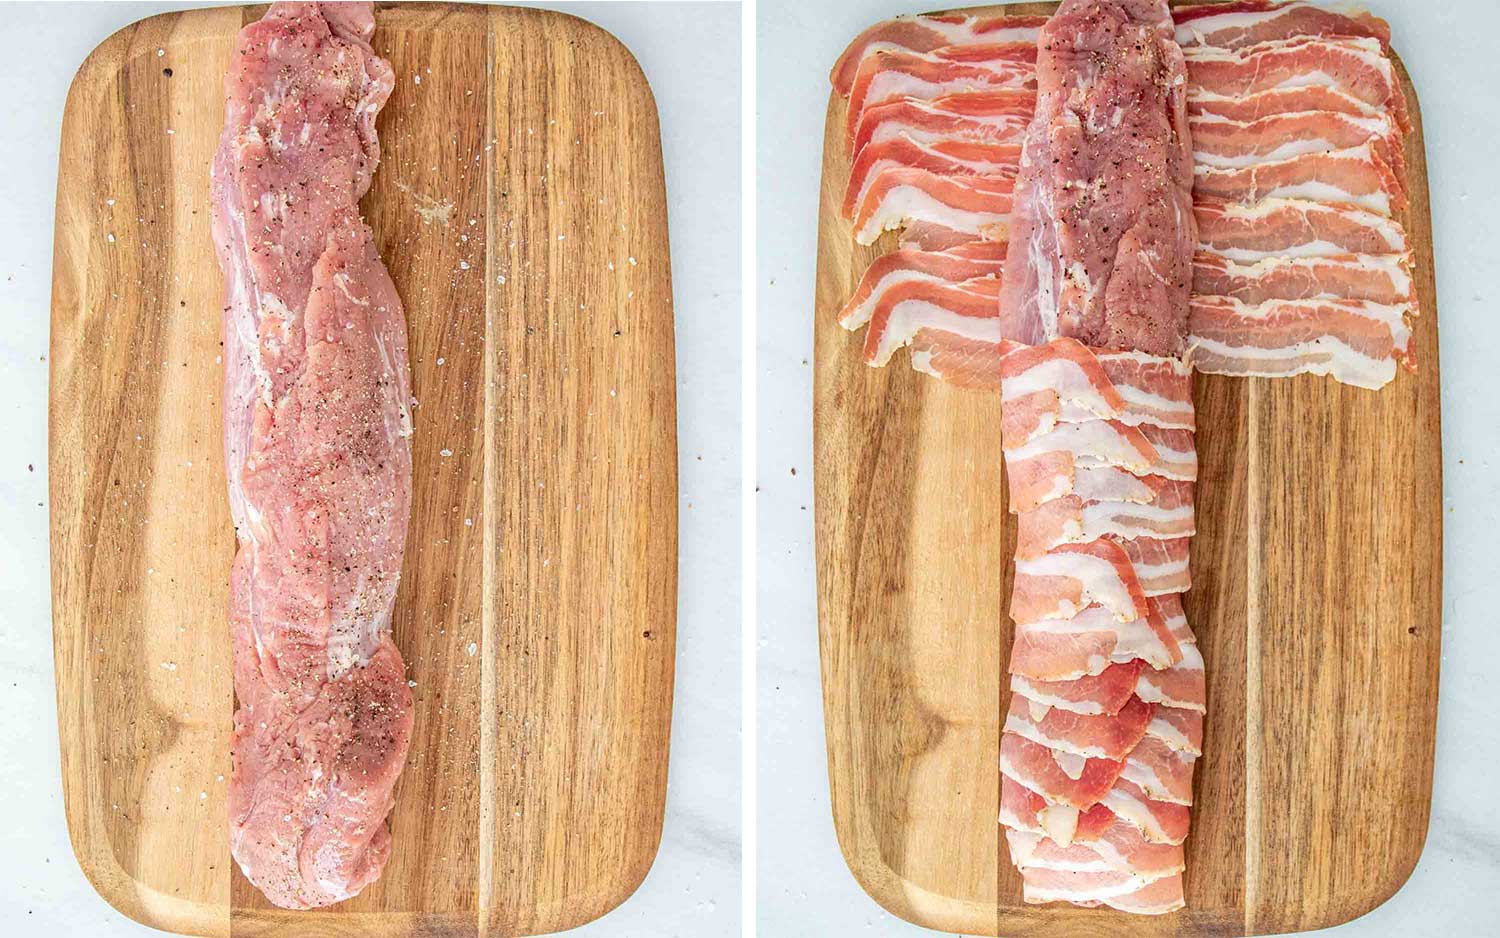 process shots showing how to make bacon wrapped pork tenderloin.